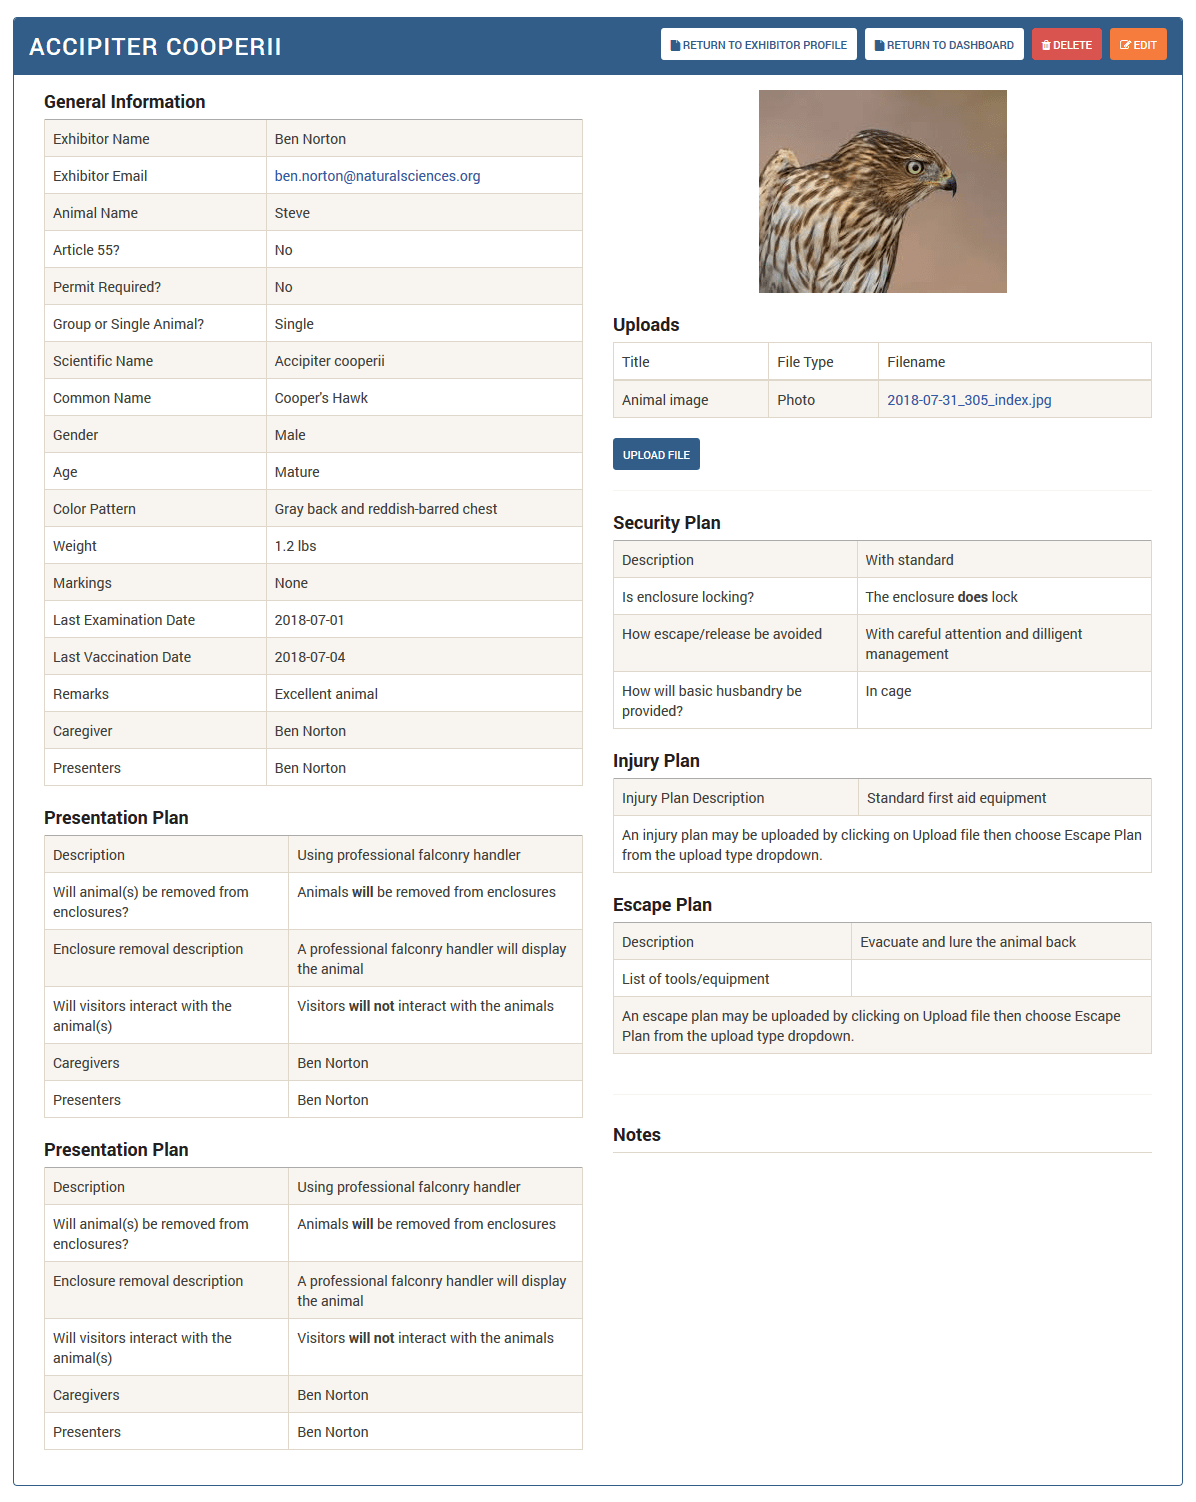 External Creature Request System Screenshot - Animal Profile 2